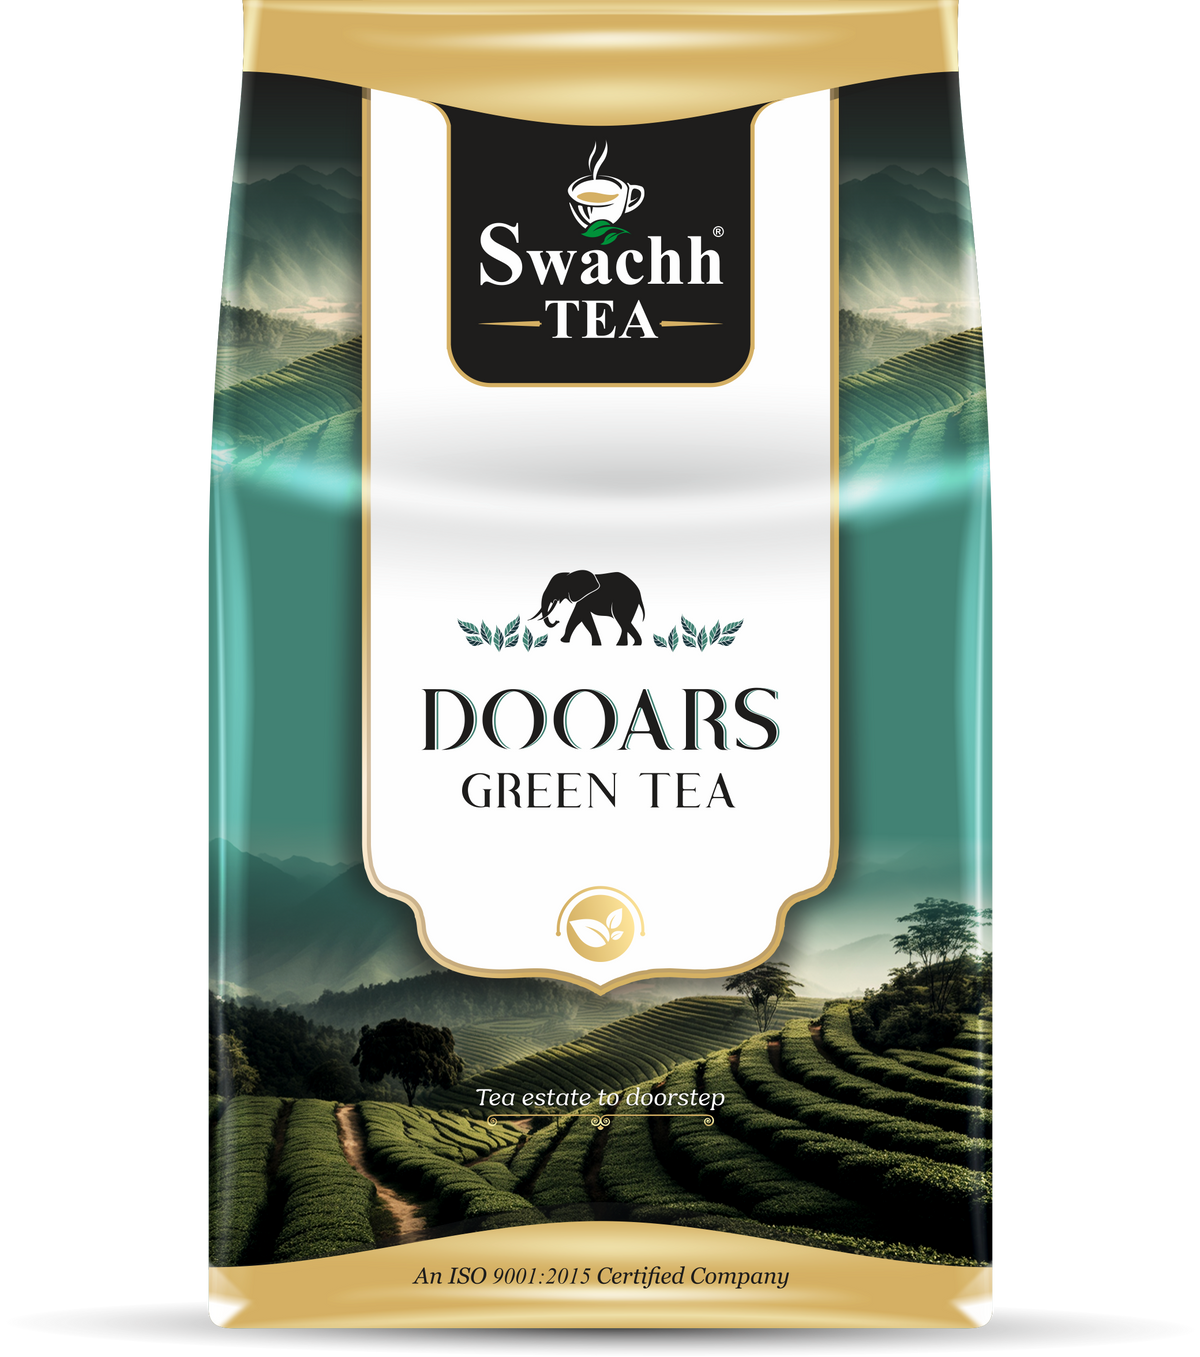 Dooars green tea